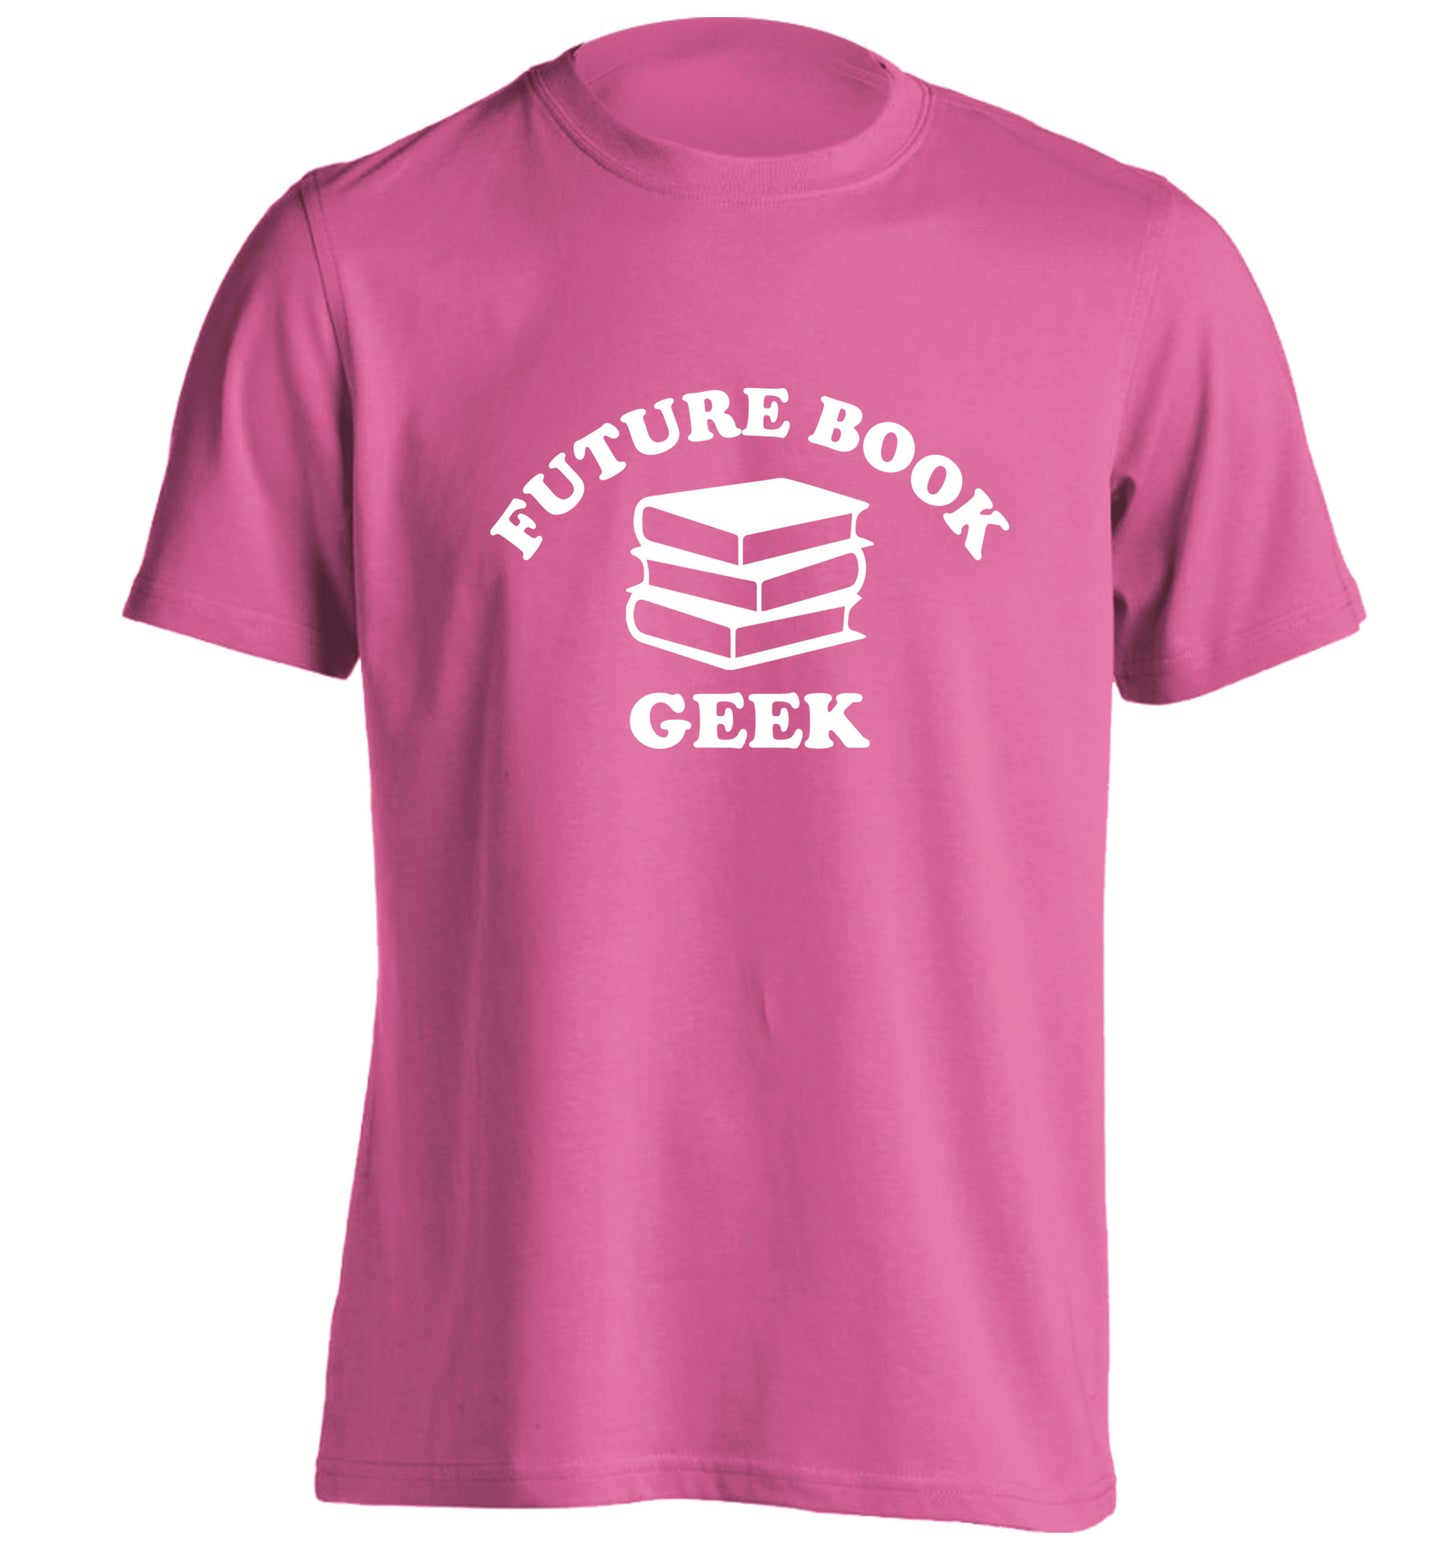 Future book geek adults unisex pink Tshirt 2XL